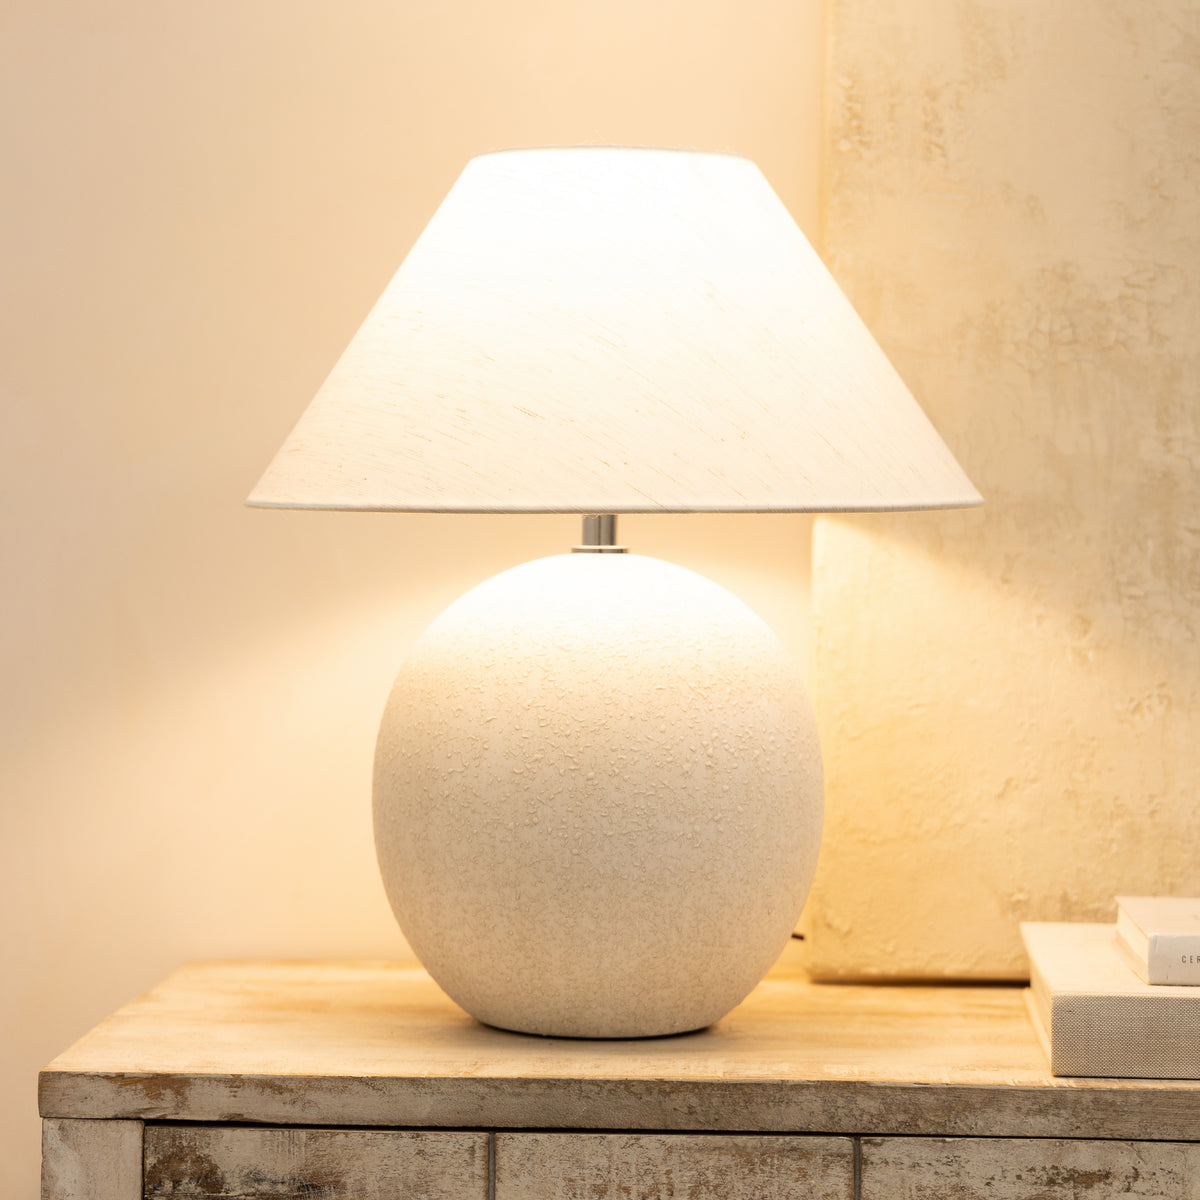 Stone ceramic coolie shade table lamp emitting warm light